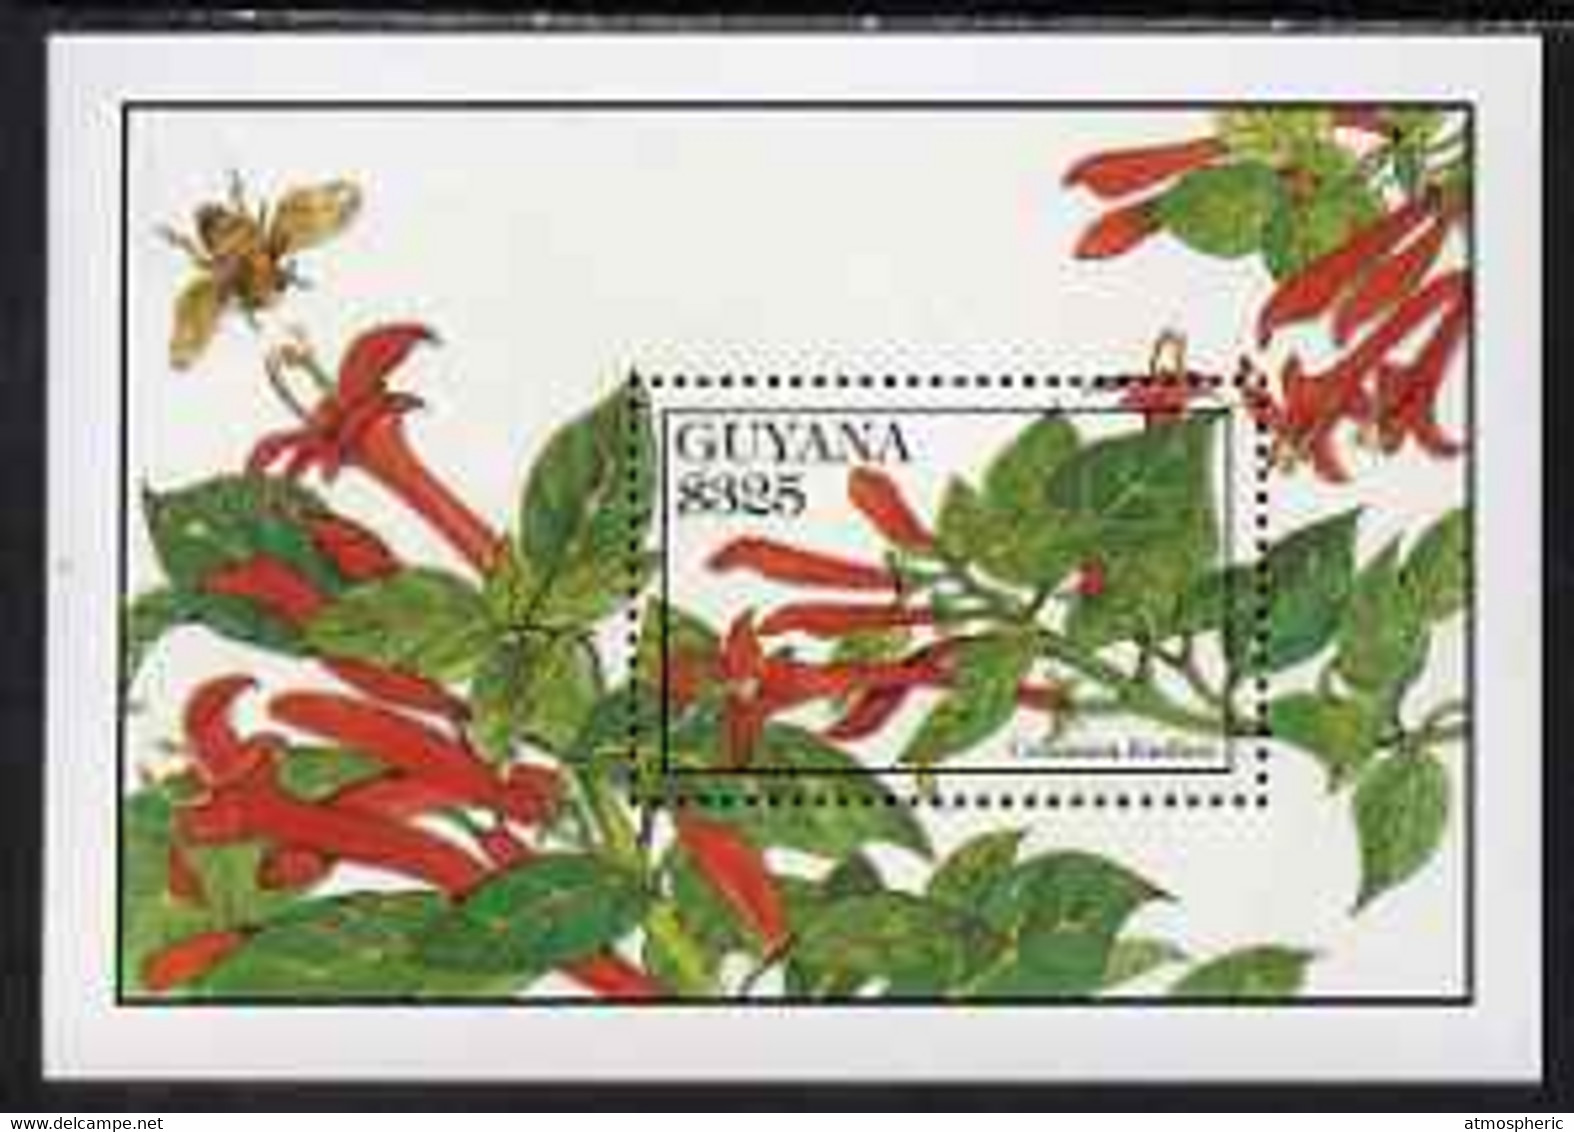 Guyana 1994 Flowers $325 Perf M/sheet (Columnea Fendleri) Unmounted Mint, SG MS 3910b - Guiana (1966-...)